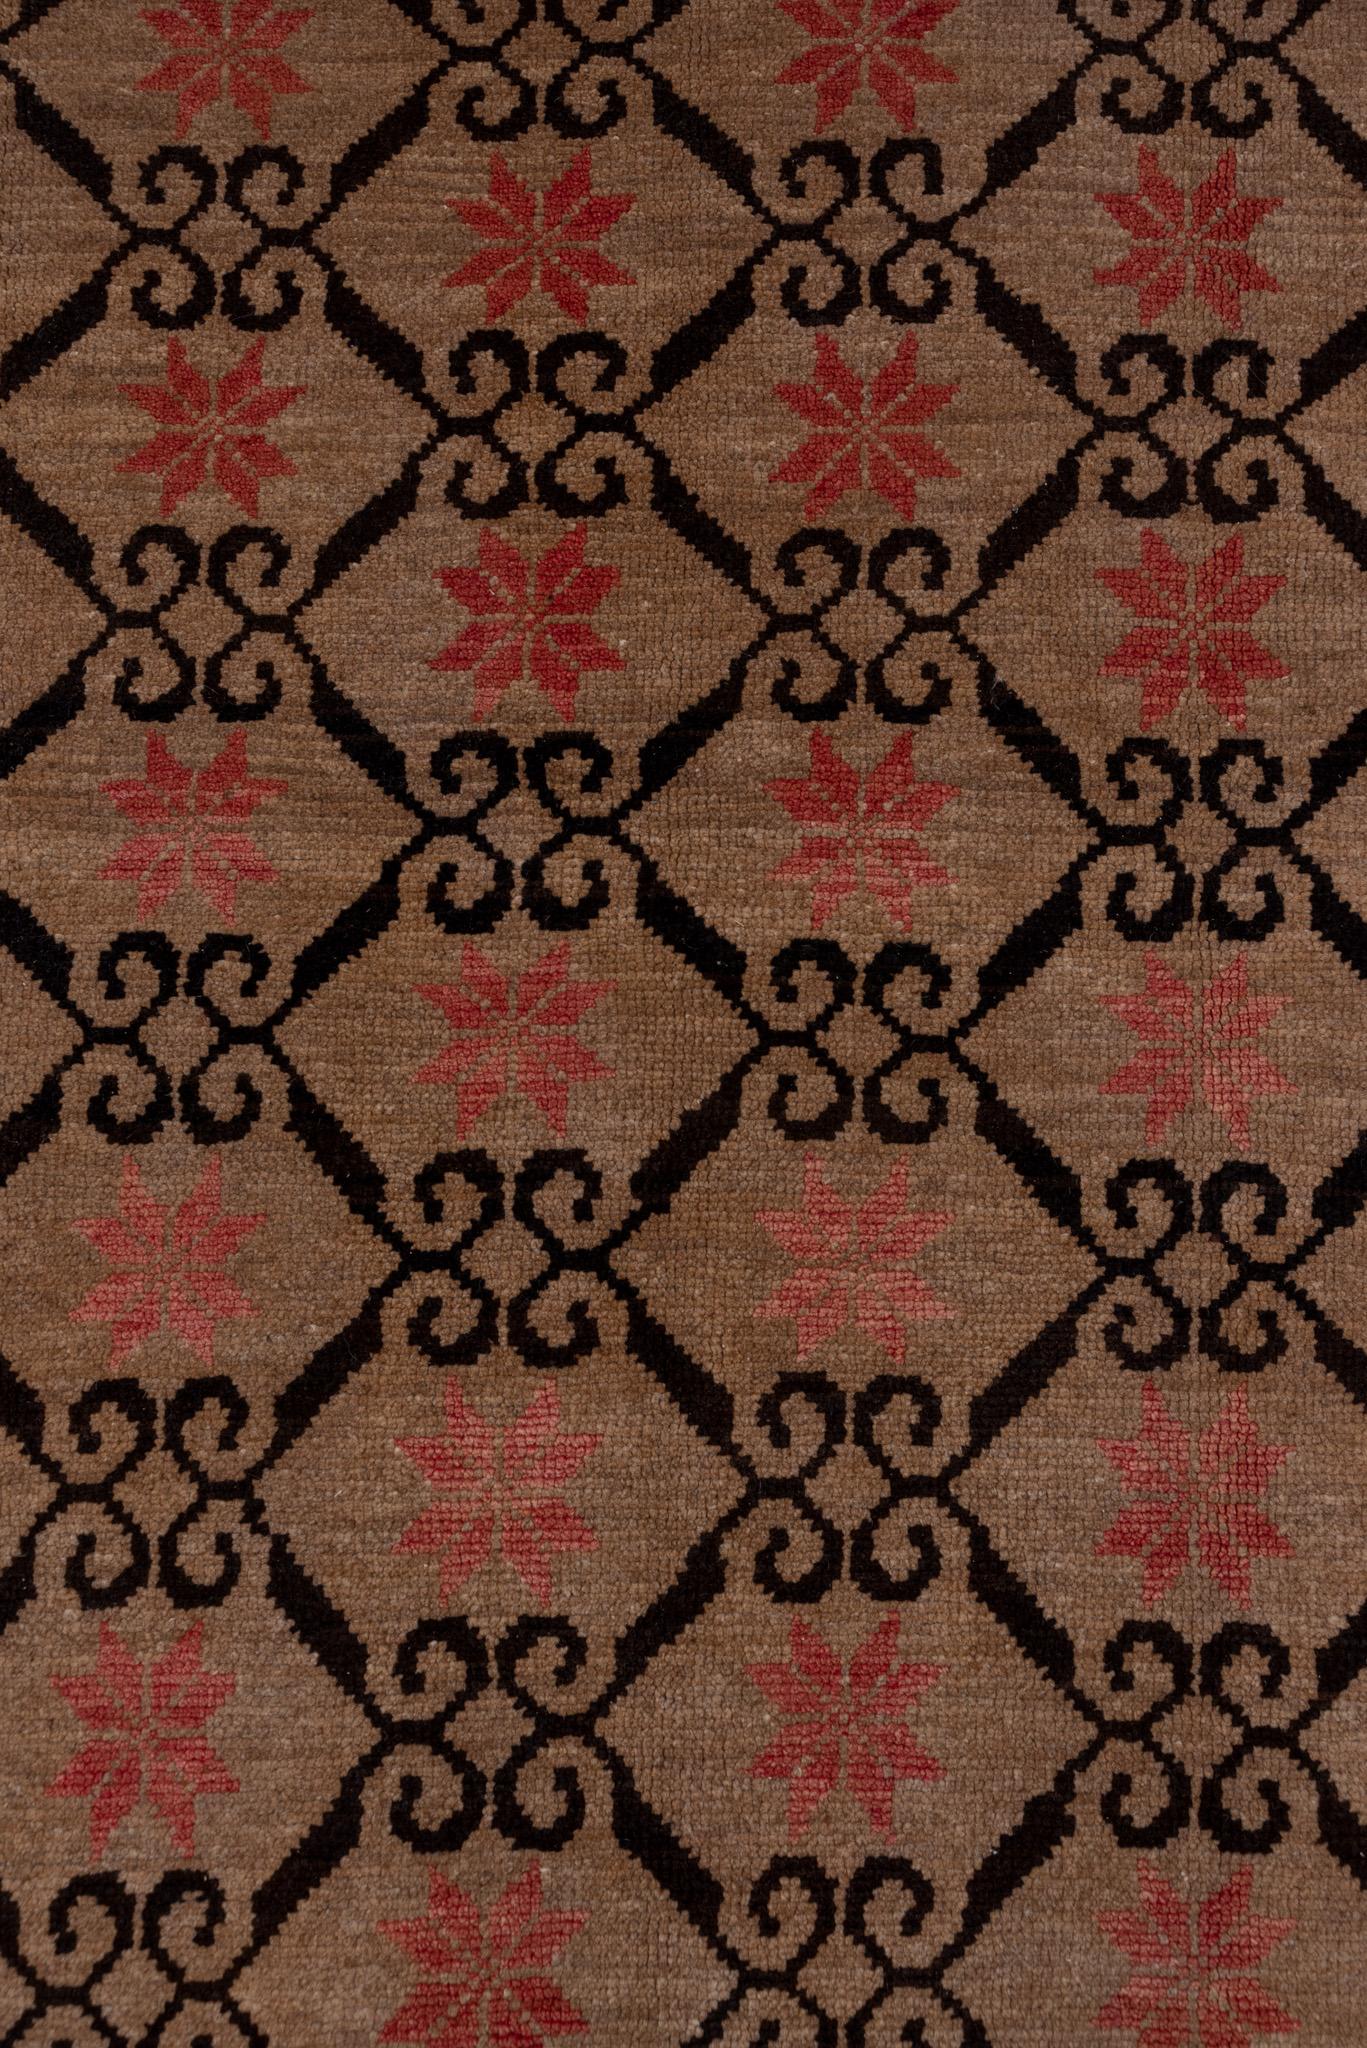 Tribal Eliko Rugs By David Ariel Vintage Turkish Kars Rug, Brown Palette For Sale